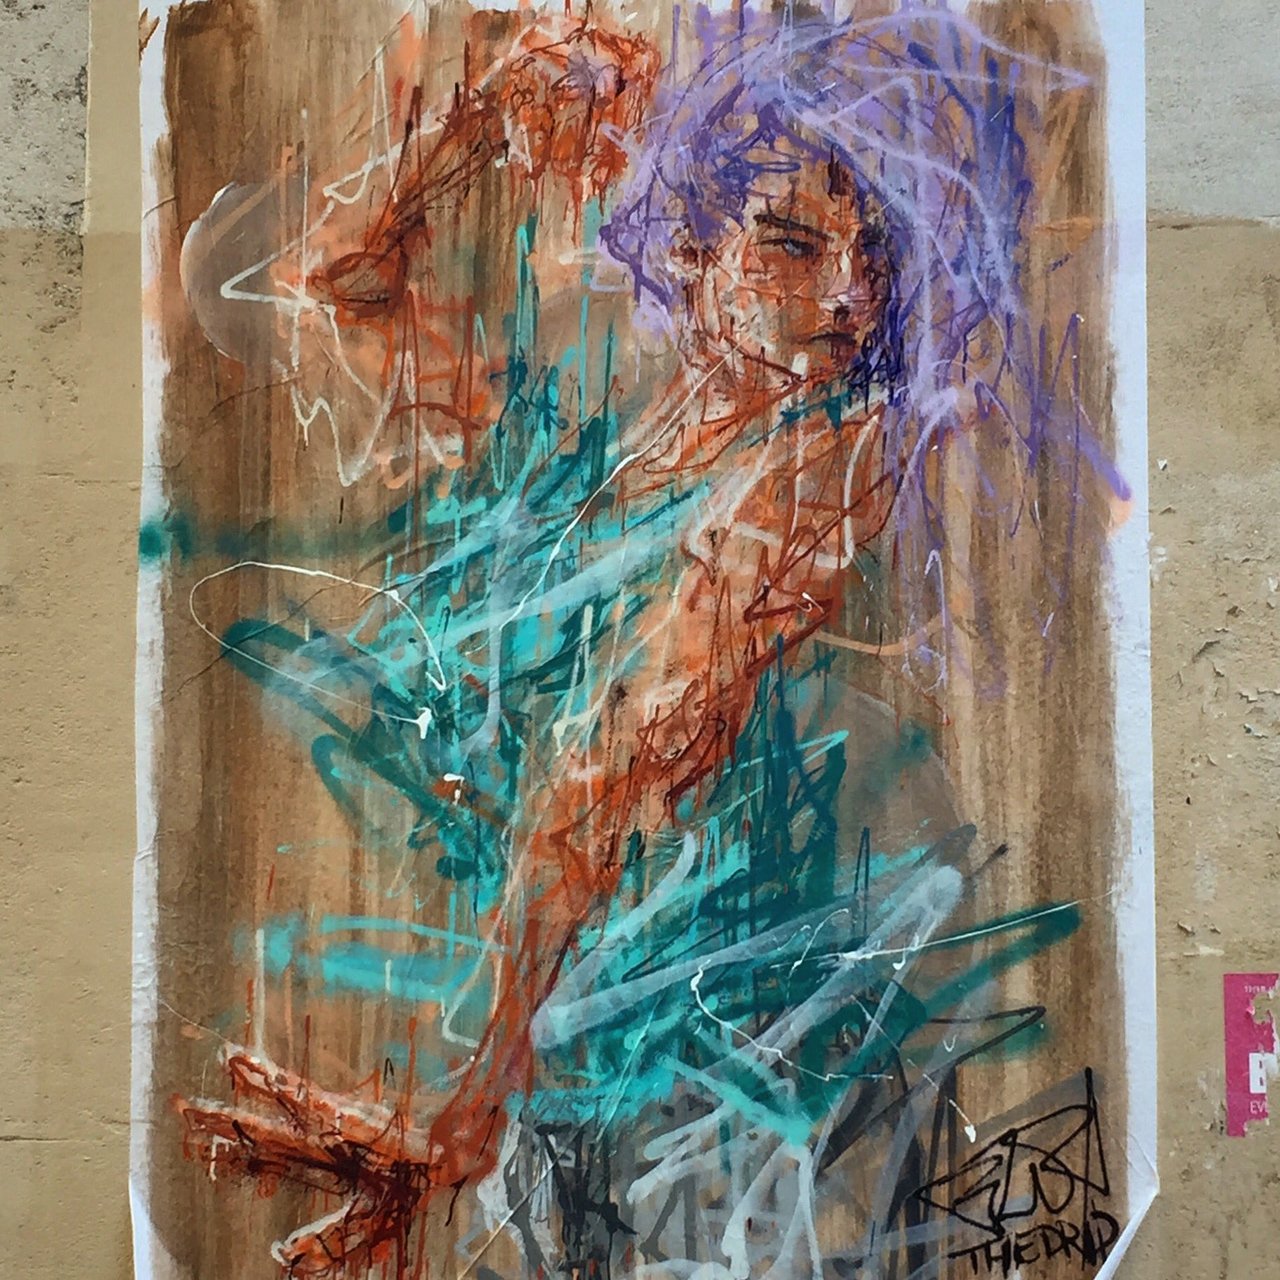 Just Dance by #bustthedrip makeyoureyesdance #streetystyle #streetart #urbanart #graffiti #graff #wall #spray #nirindastreet #paris https://t.co/Wr1mYnOihm